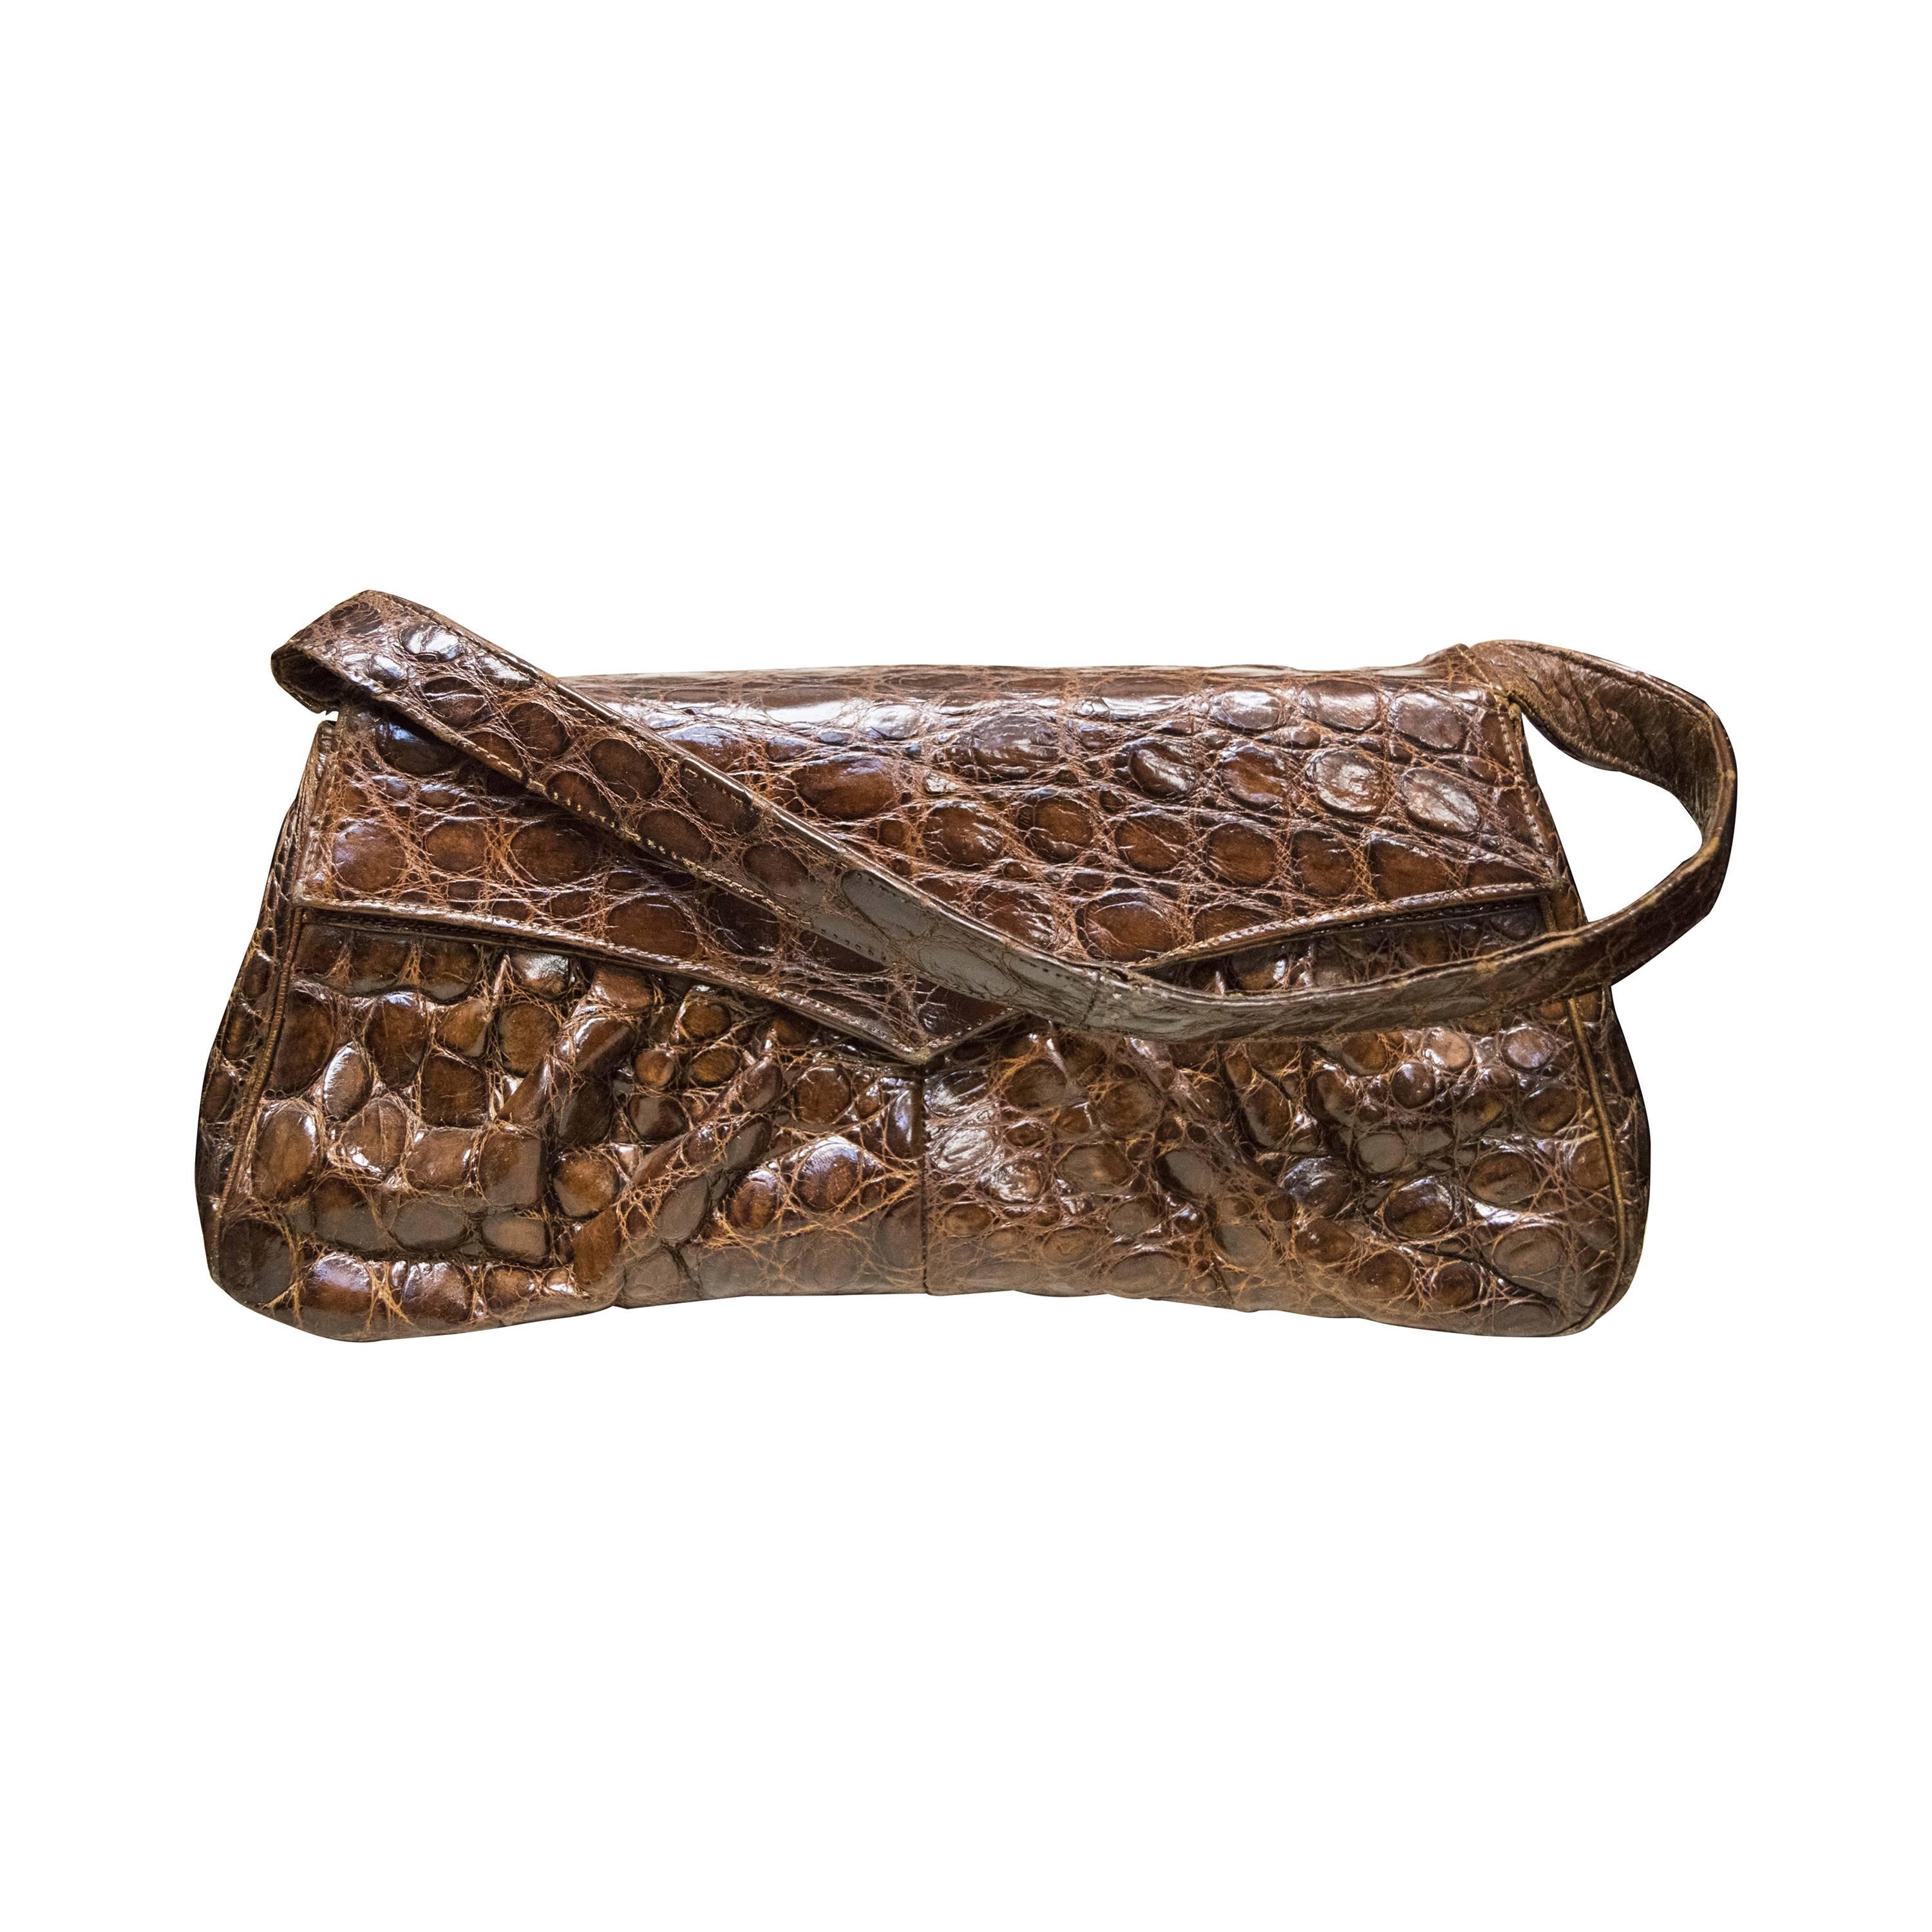 1940s Rouched Alligator Handbag   